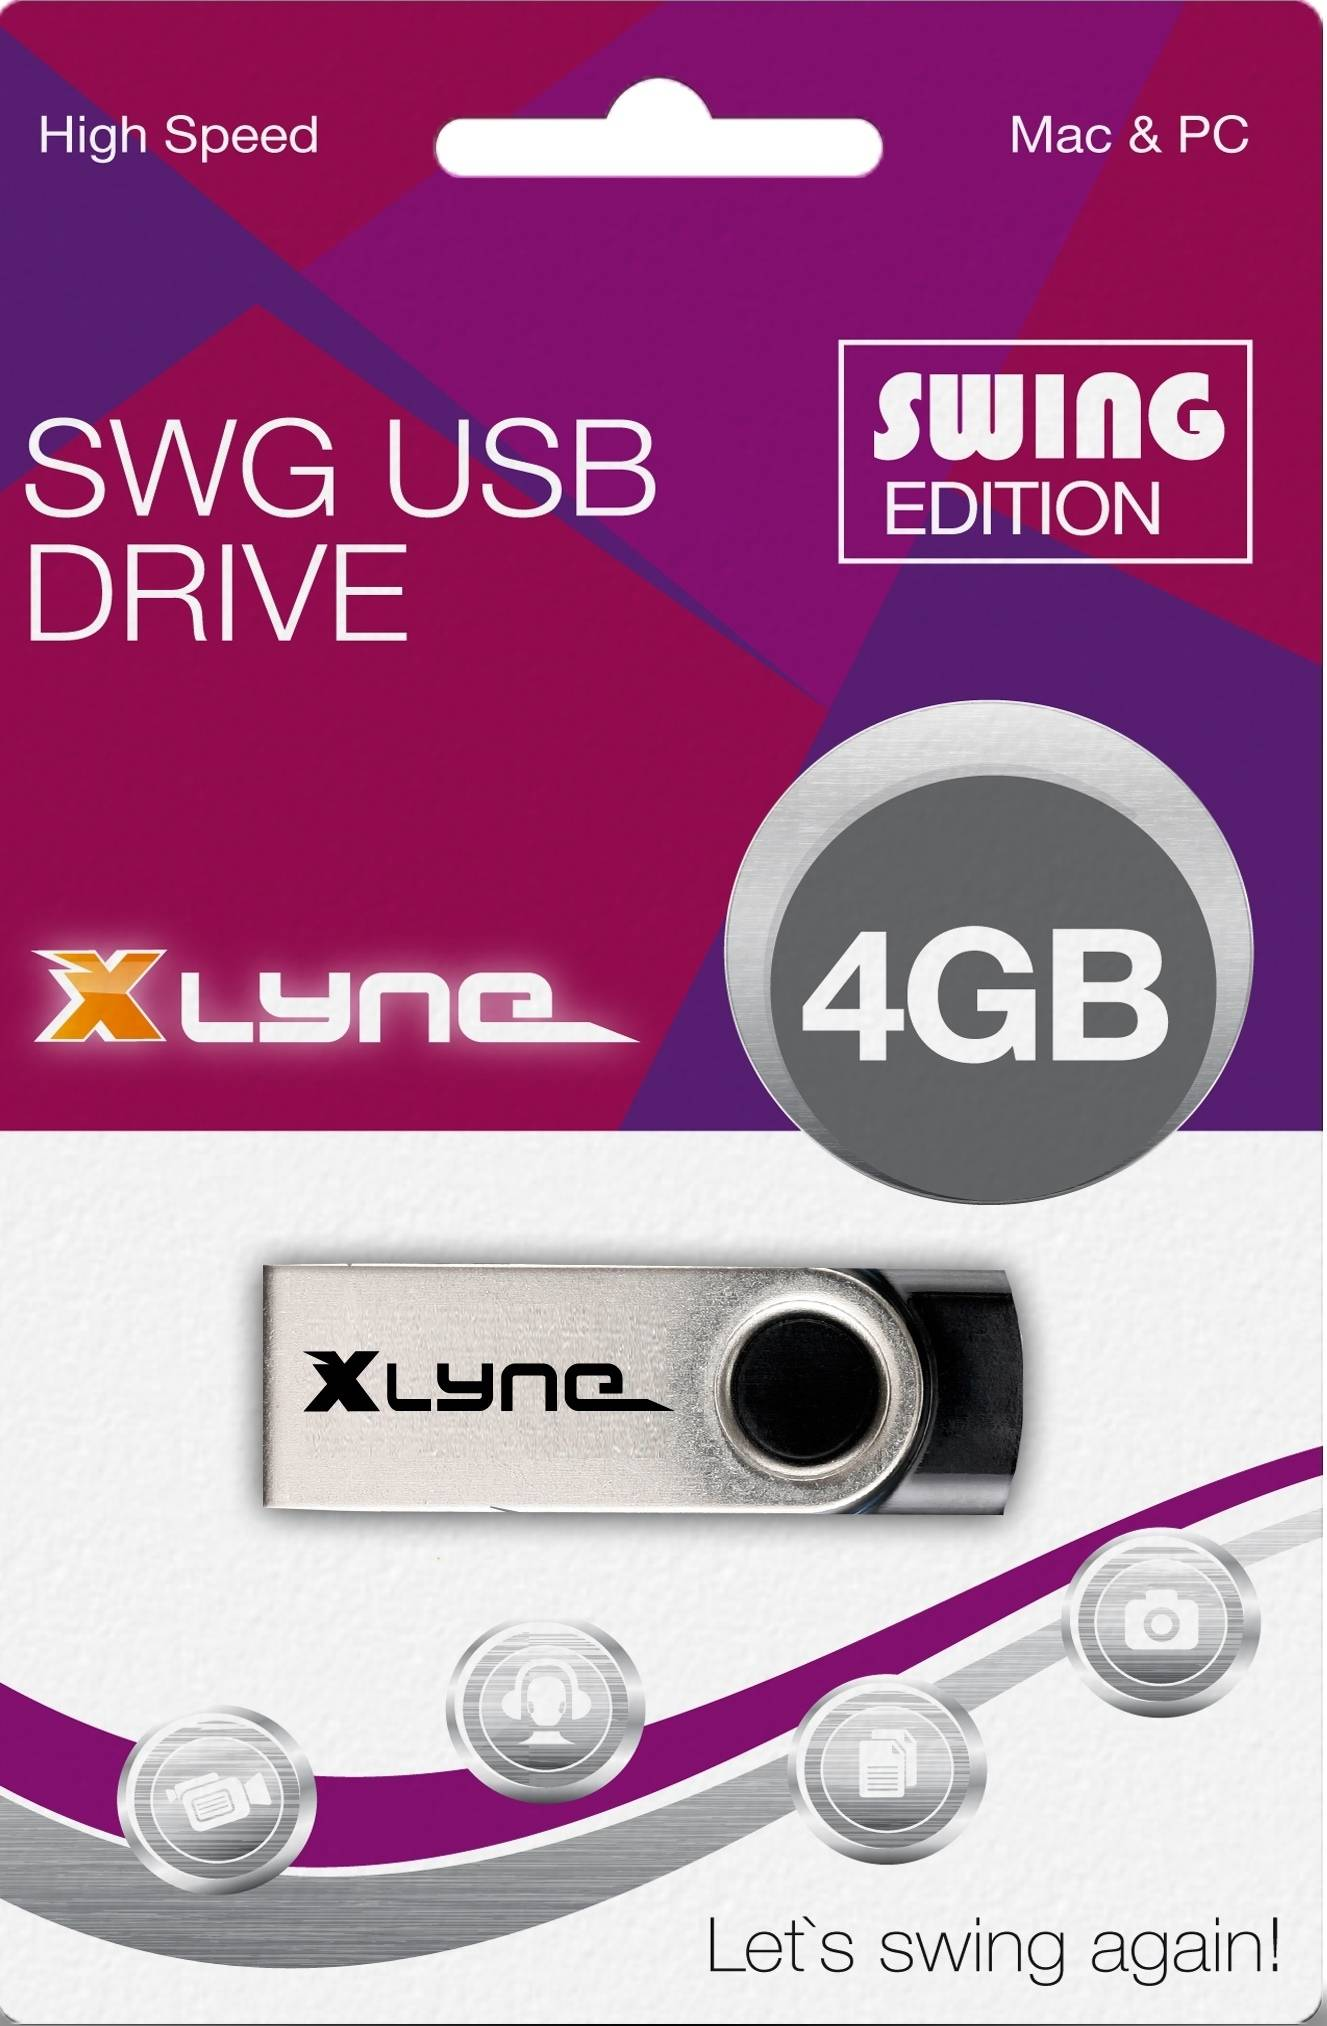 - 2.0 4 USB 4 / GB) SILBER, XLYNE Stick (SCHWARZ GB USB